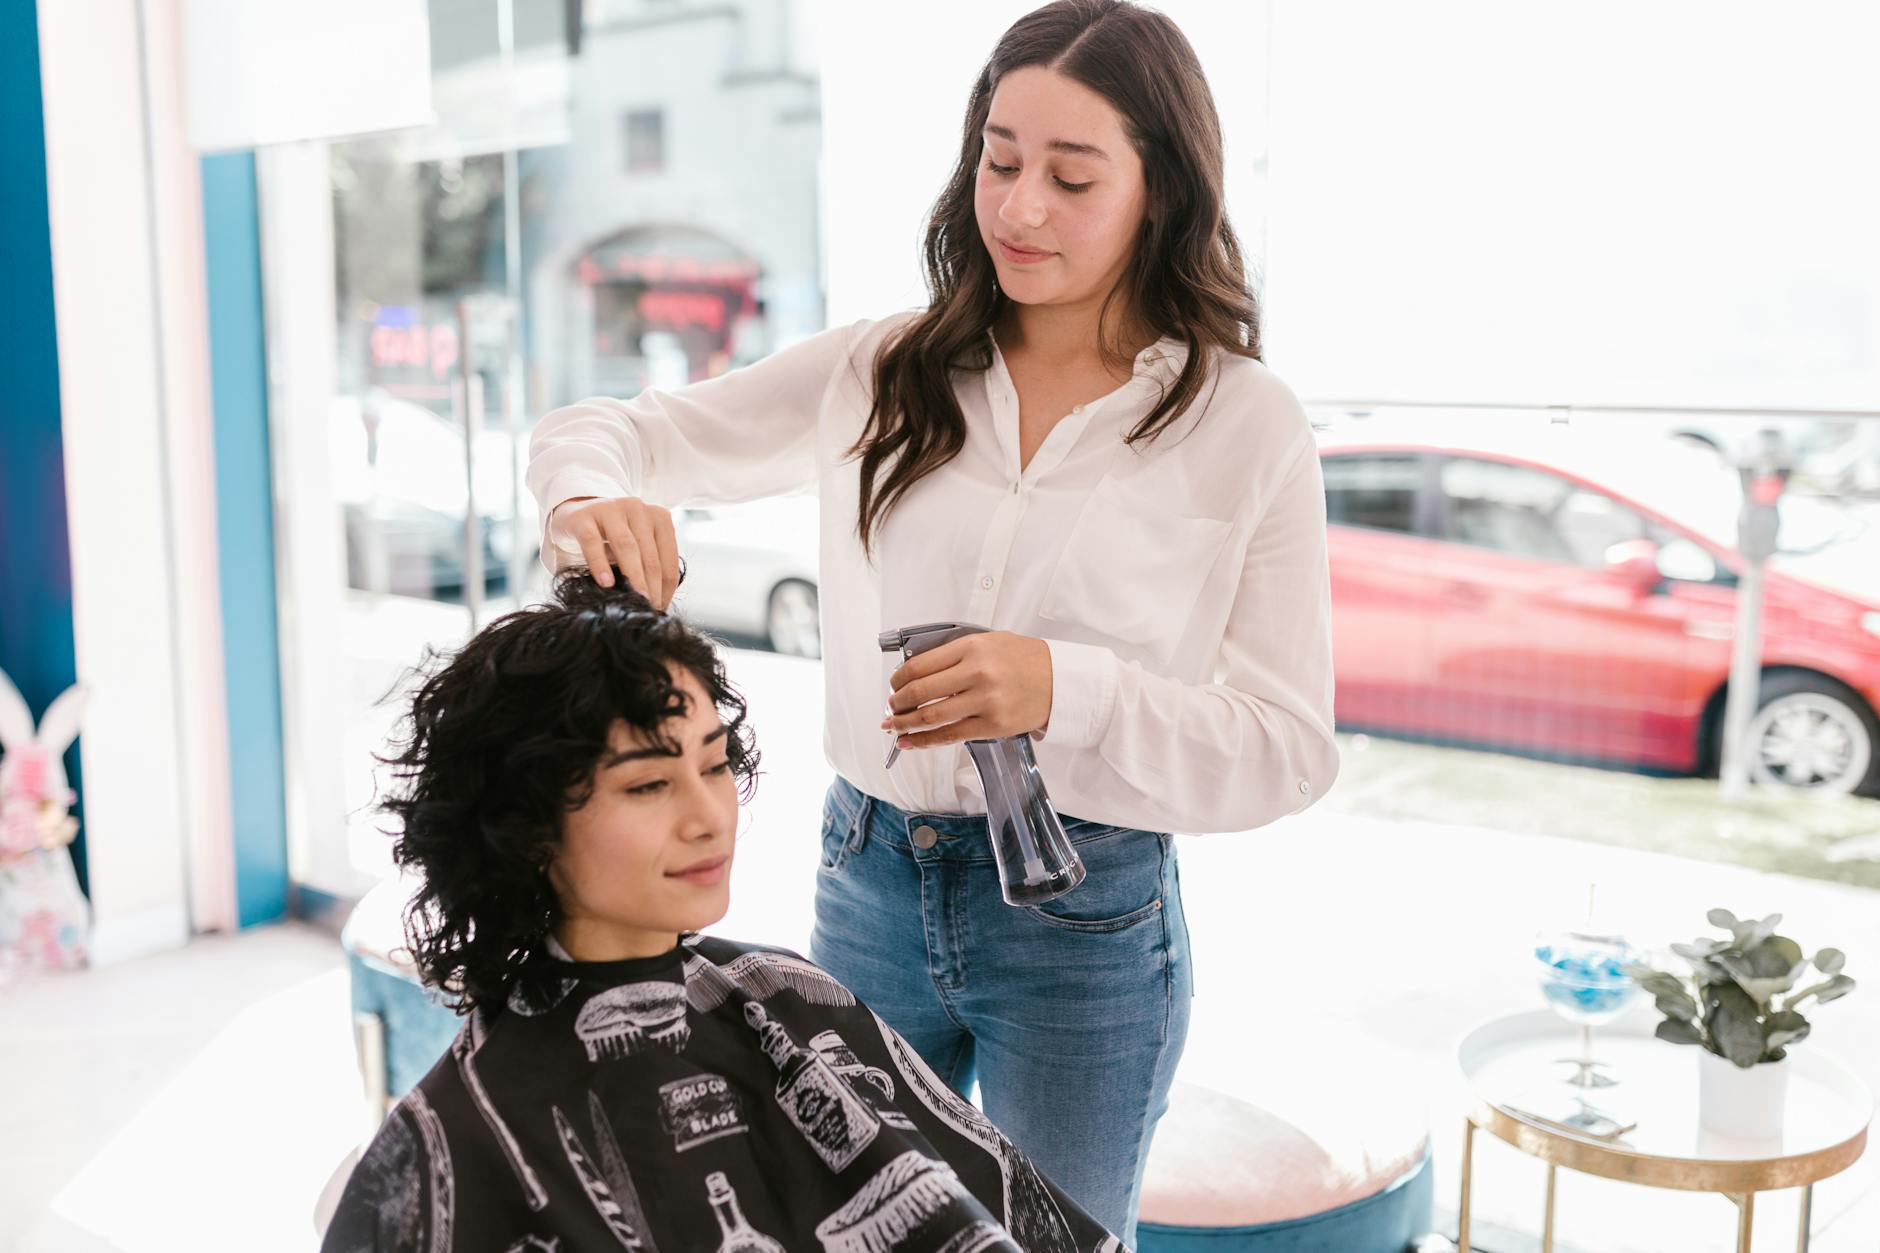 Woman Getting a New Haircut